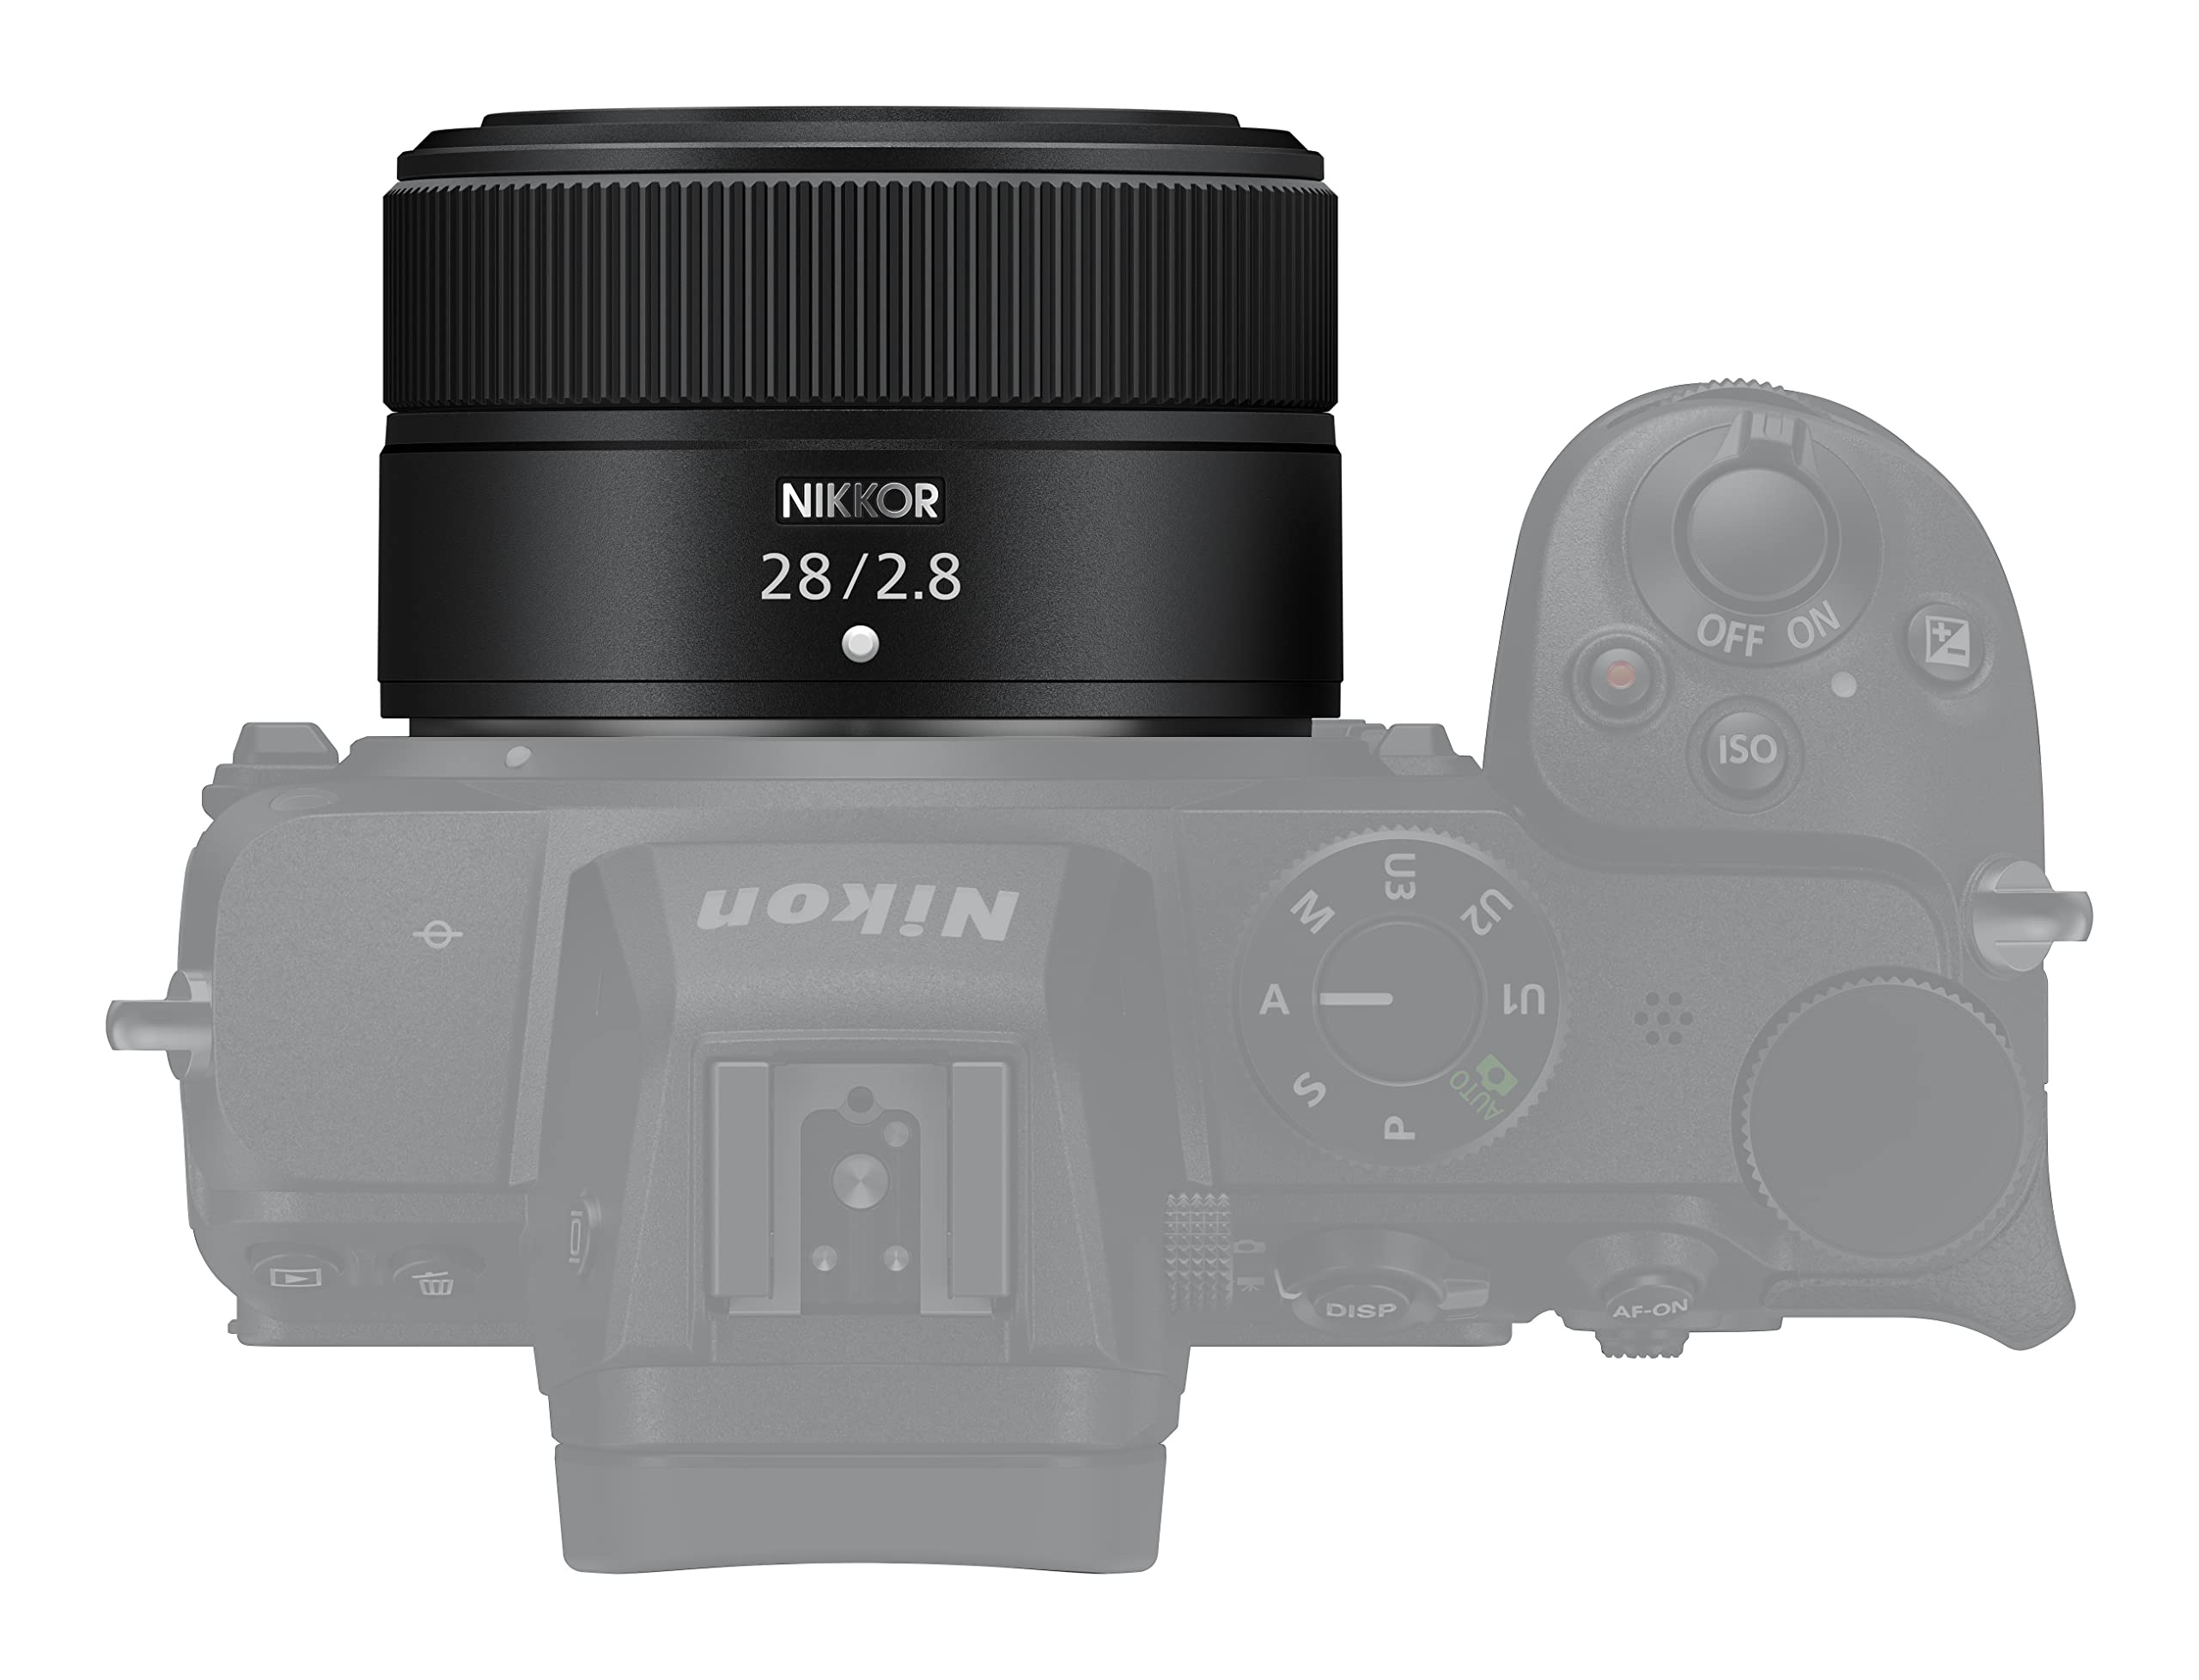 Nikon NIKKOR Z 28mm f/2.8 | Compact standard prime lens for Z series mirrorless cameras | Nikon USA Model